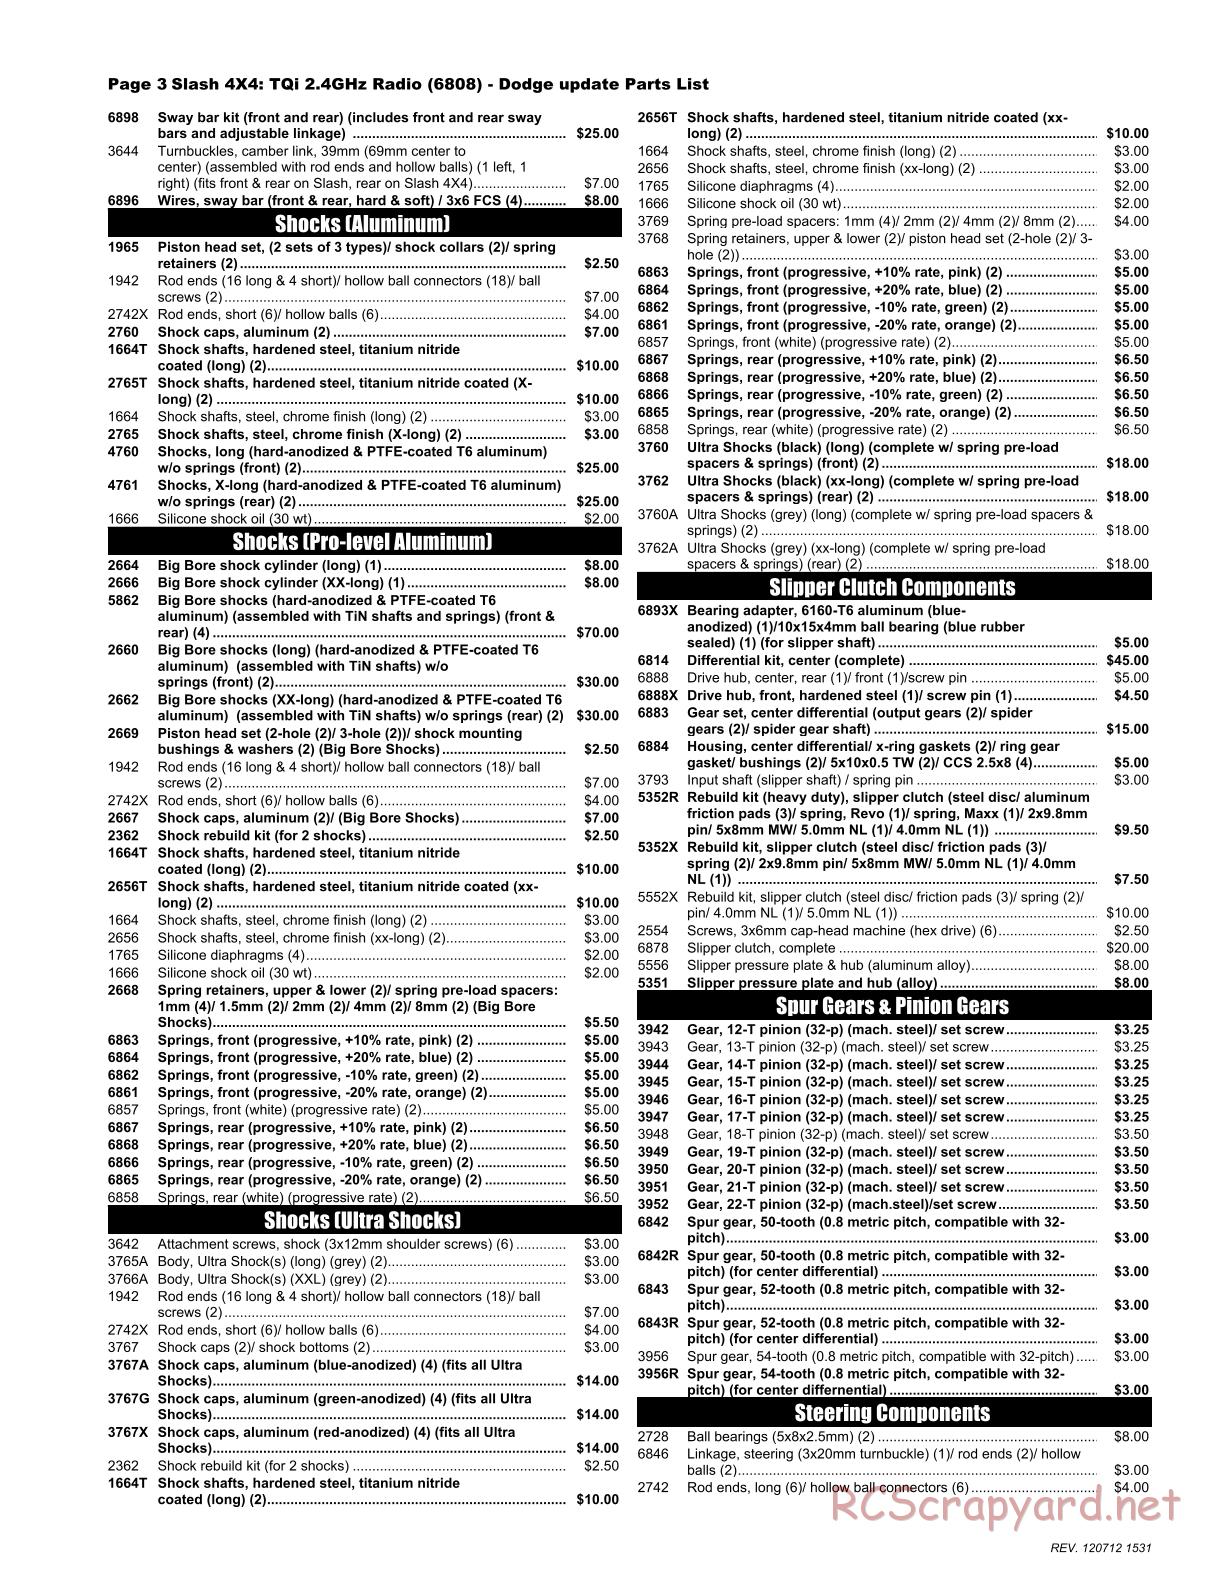 Traxxas - Slash 4x4 - Parts List - Page 3